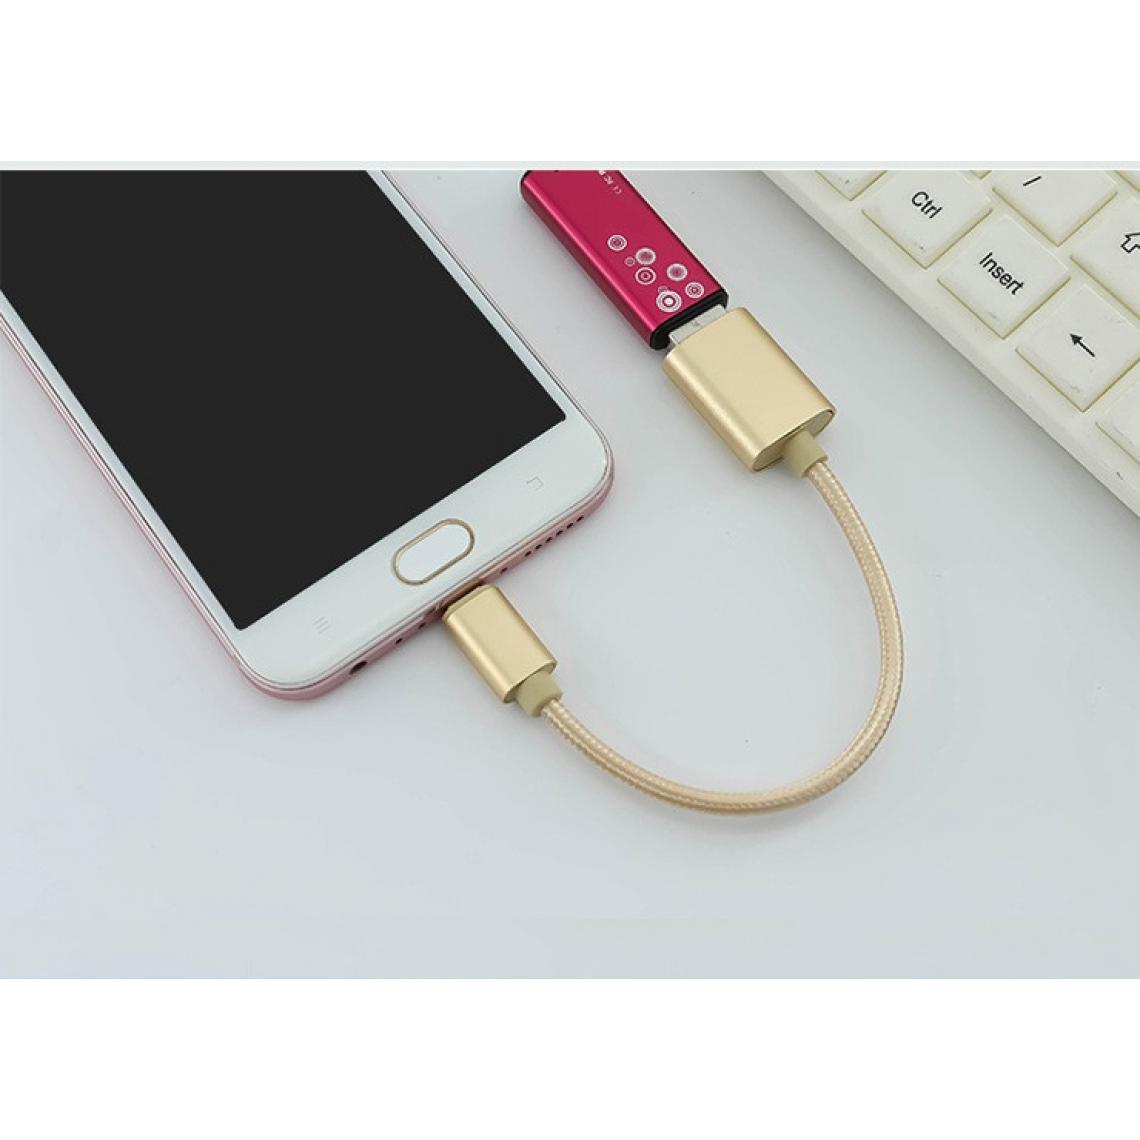 Shot - Adaptateur Type C/USB pour SAMSUNG Galaxy NOTE 10+ Smartphone & MAC USB-C Clef (OR) - Autres accessoires smartphone